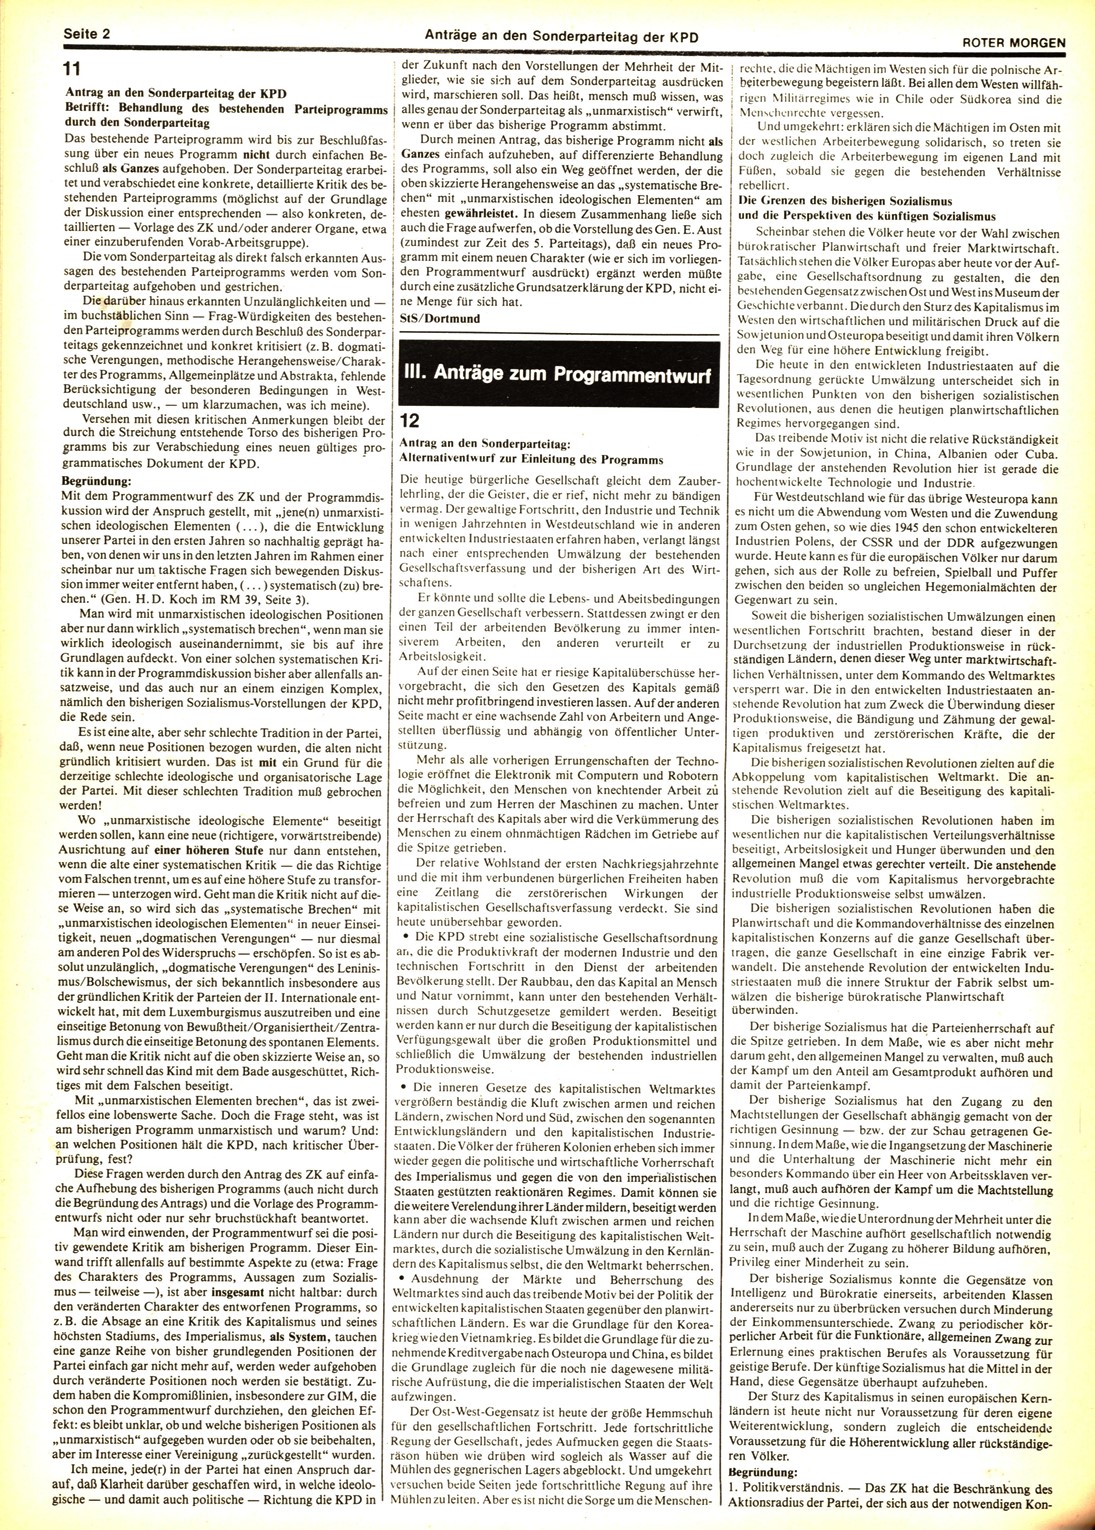 Roter Morgen, 19. Jg., 11. Oktober 1985, Nr. 41, Sonderbeilage, Seite 2